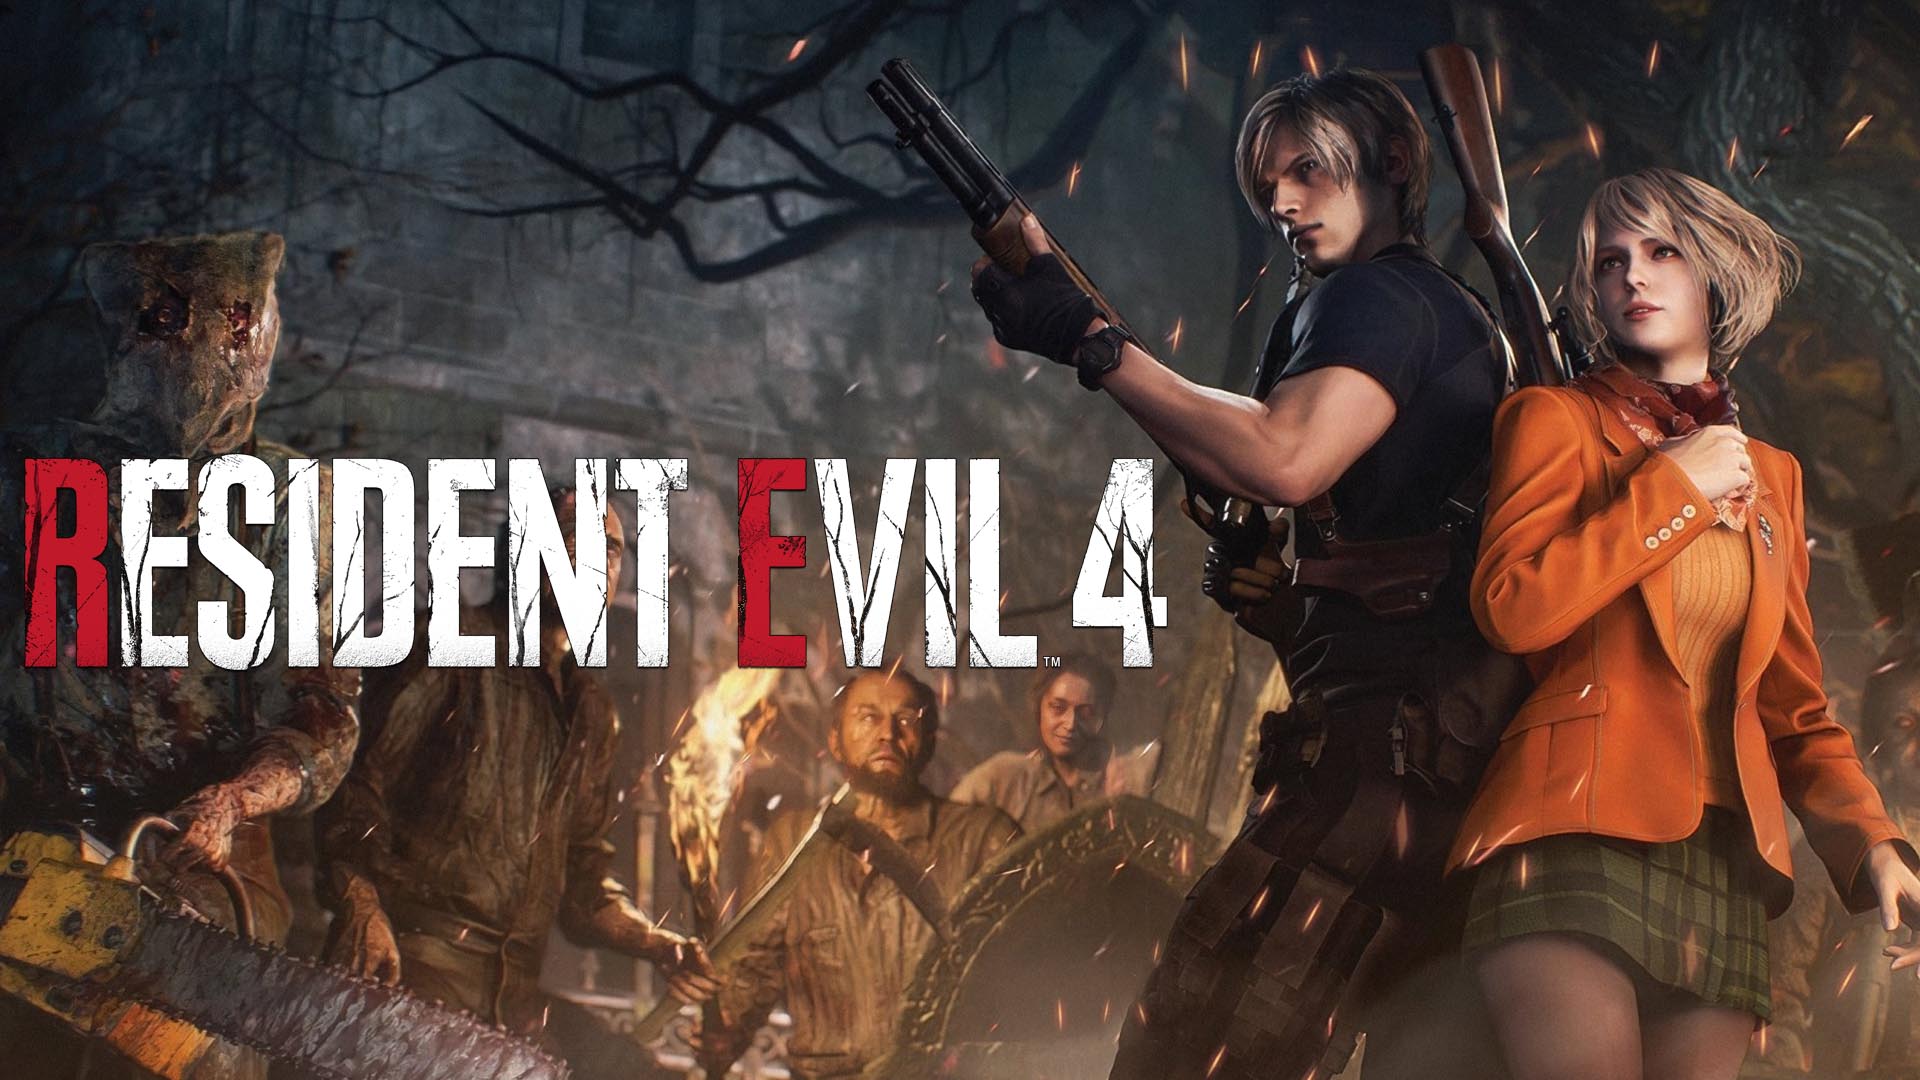 Ashley Graham Voice - Resident Evil 4 (2023) (Video Game) - Behind